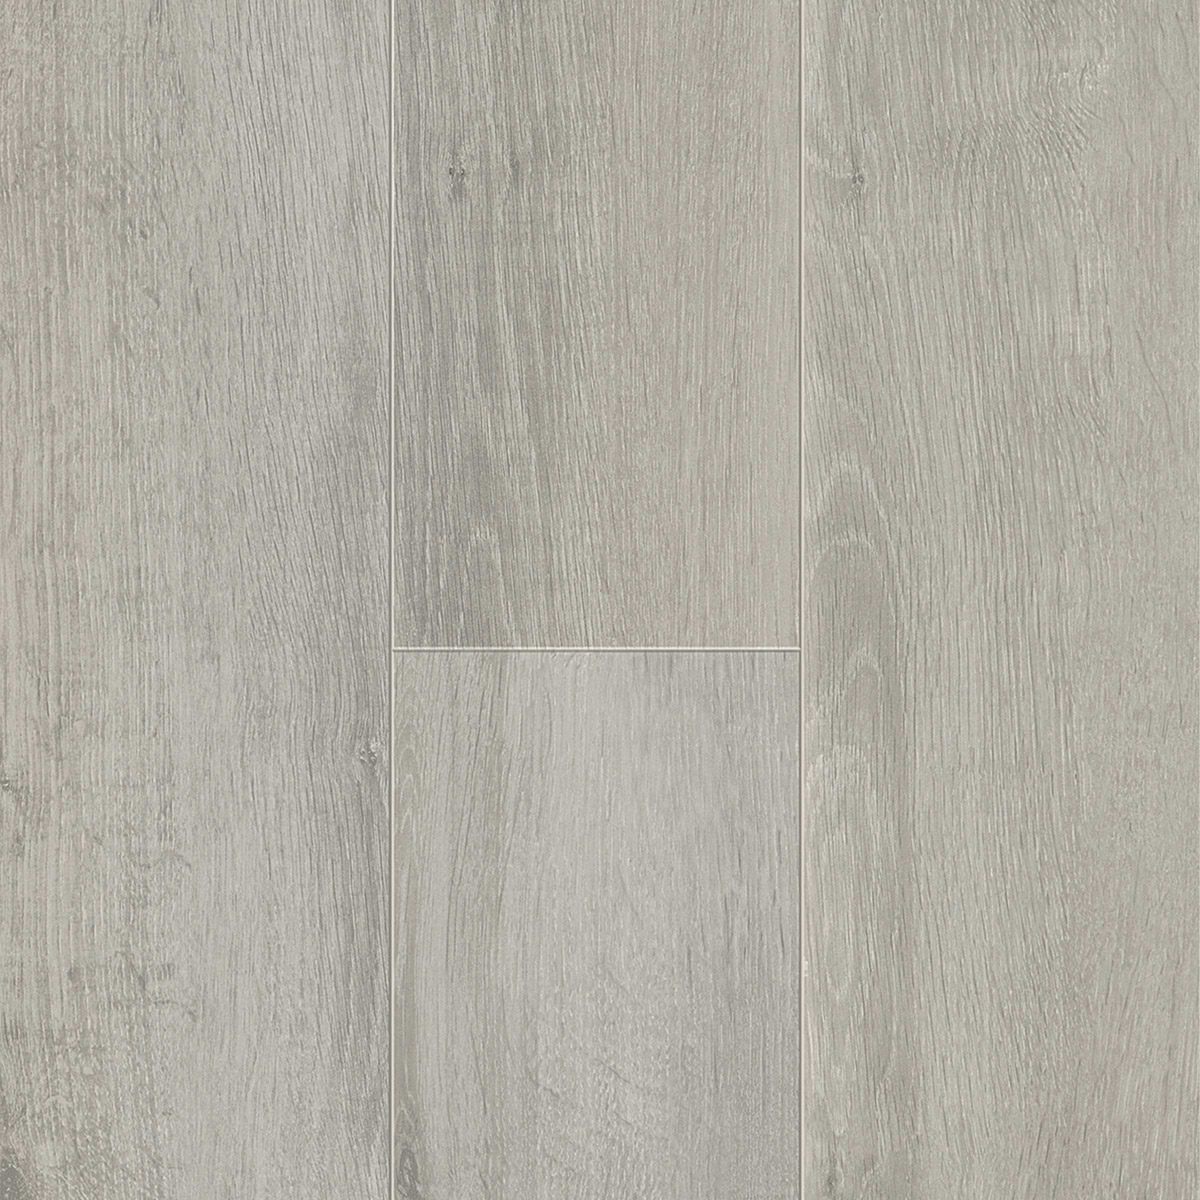 Aqua Step Oak grey waterproof laminate flooring 1200mm x 170mm x 8mm |  VictoriaPlum.com